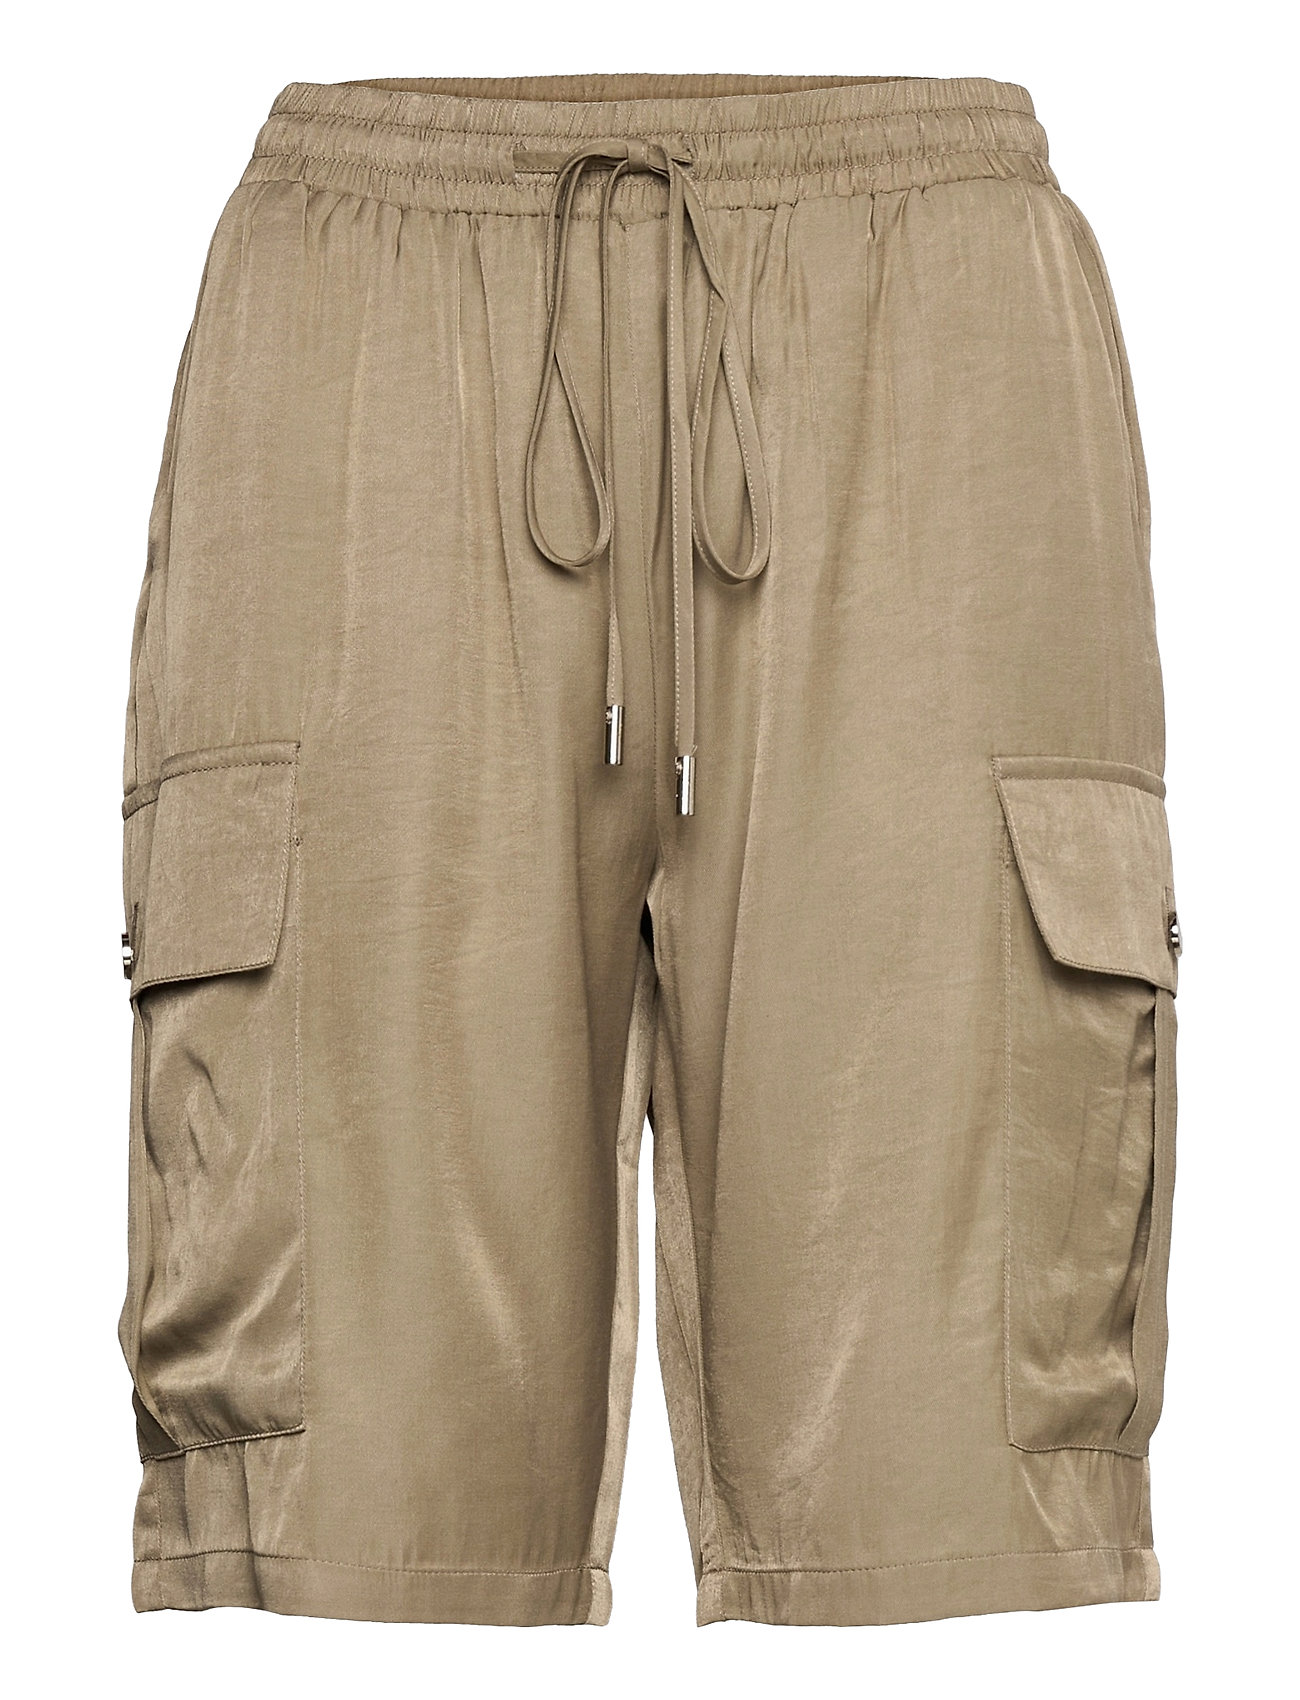 Crallies Shorts Shorts Flowy Shorts/Casual Shorts Beige Cream